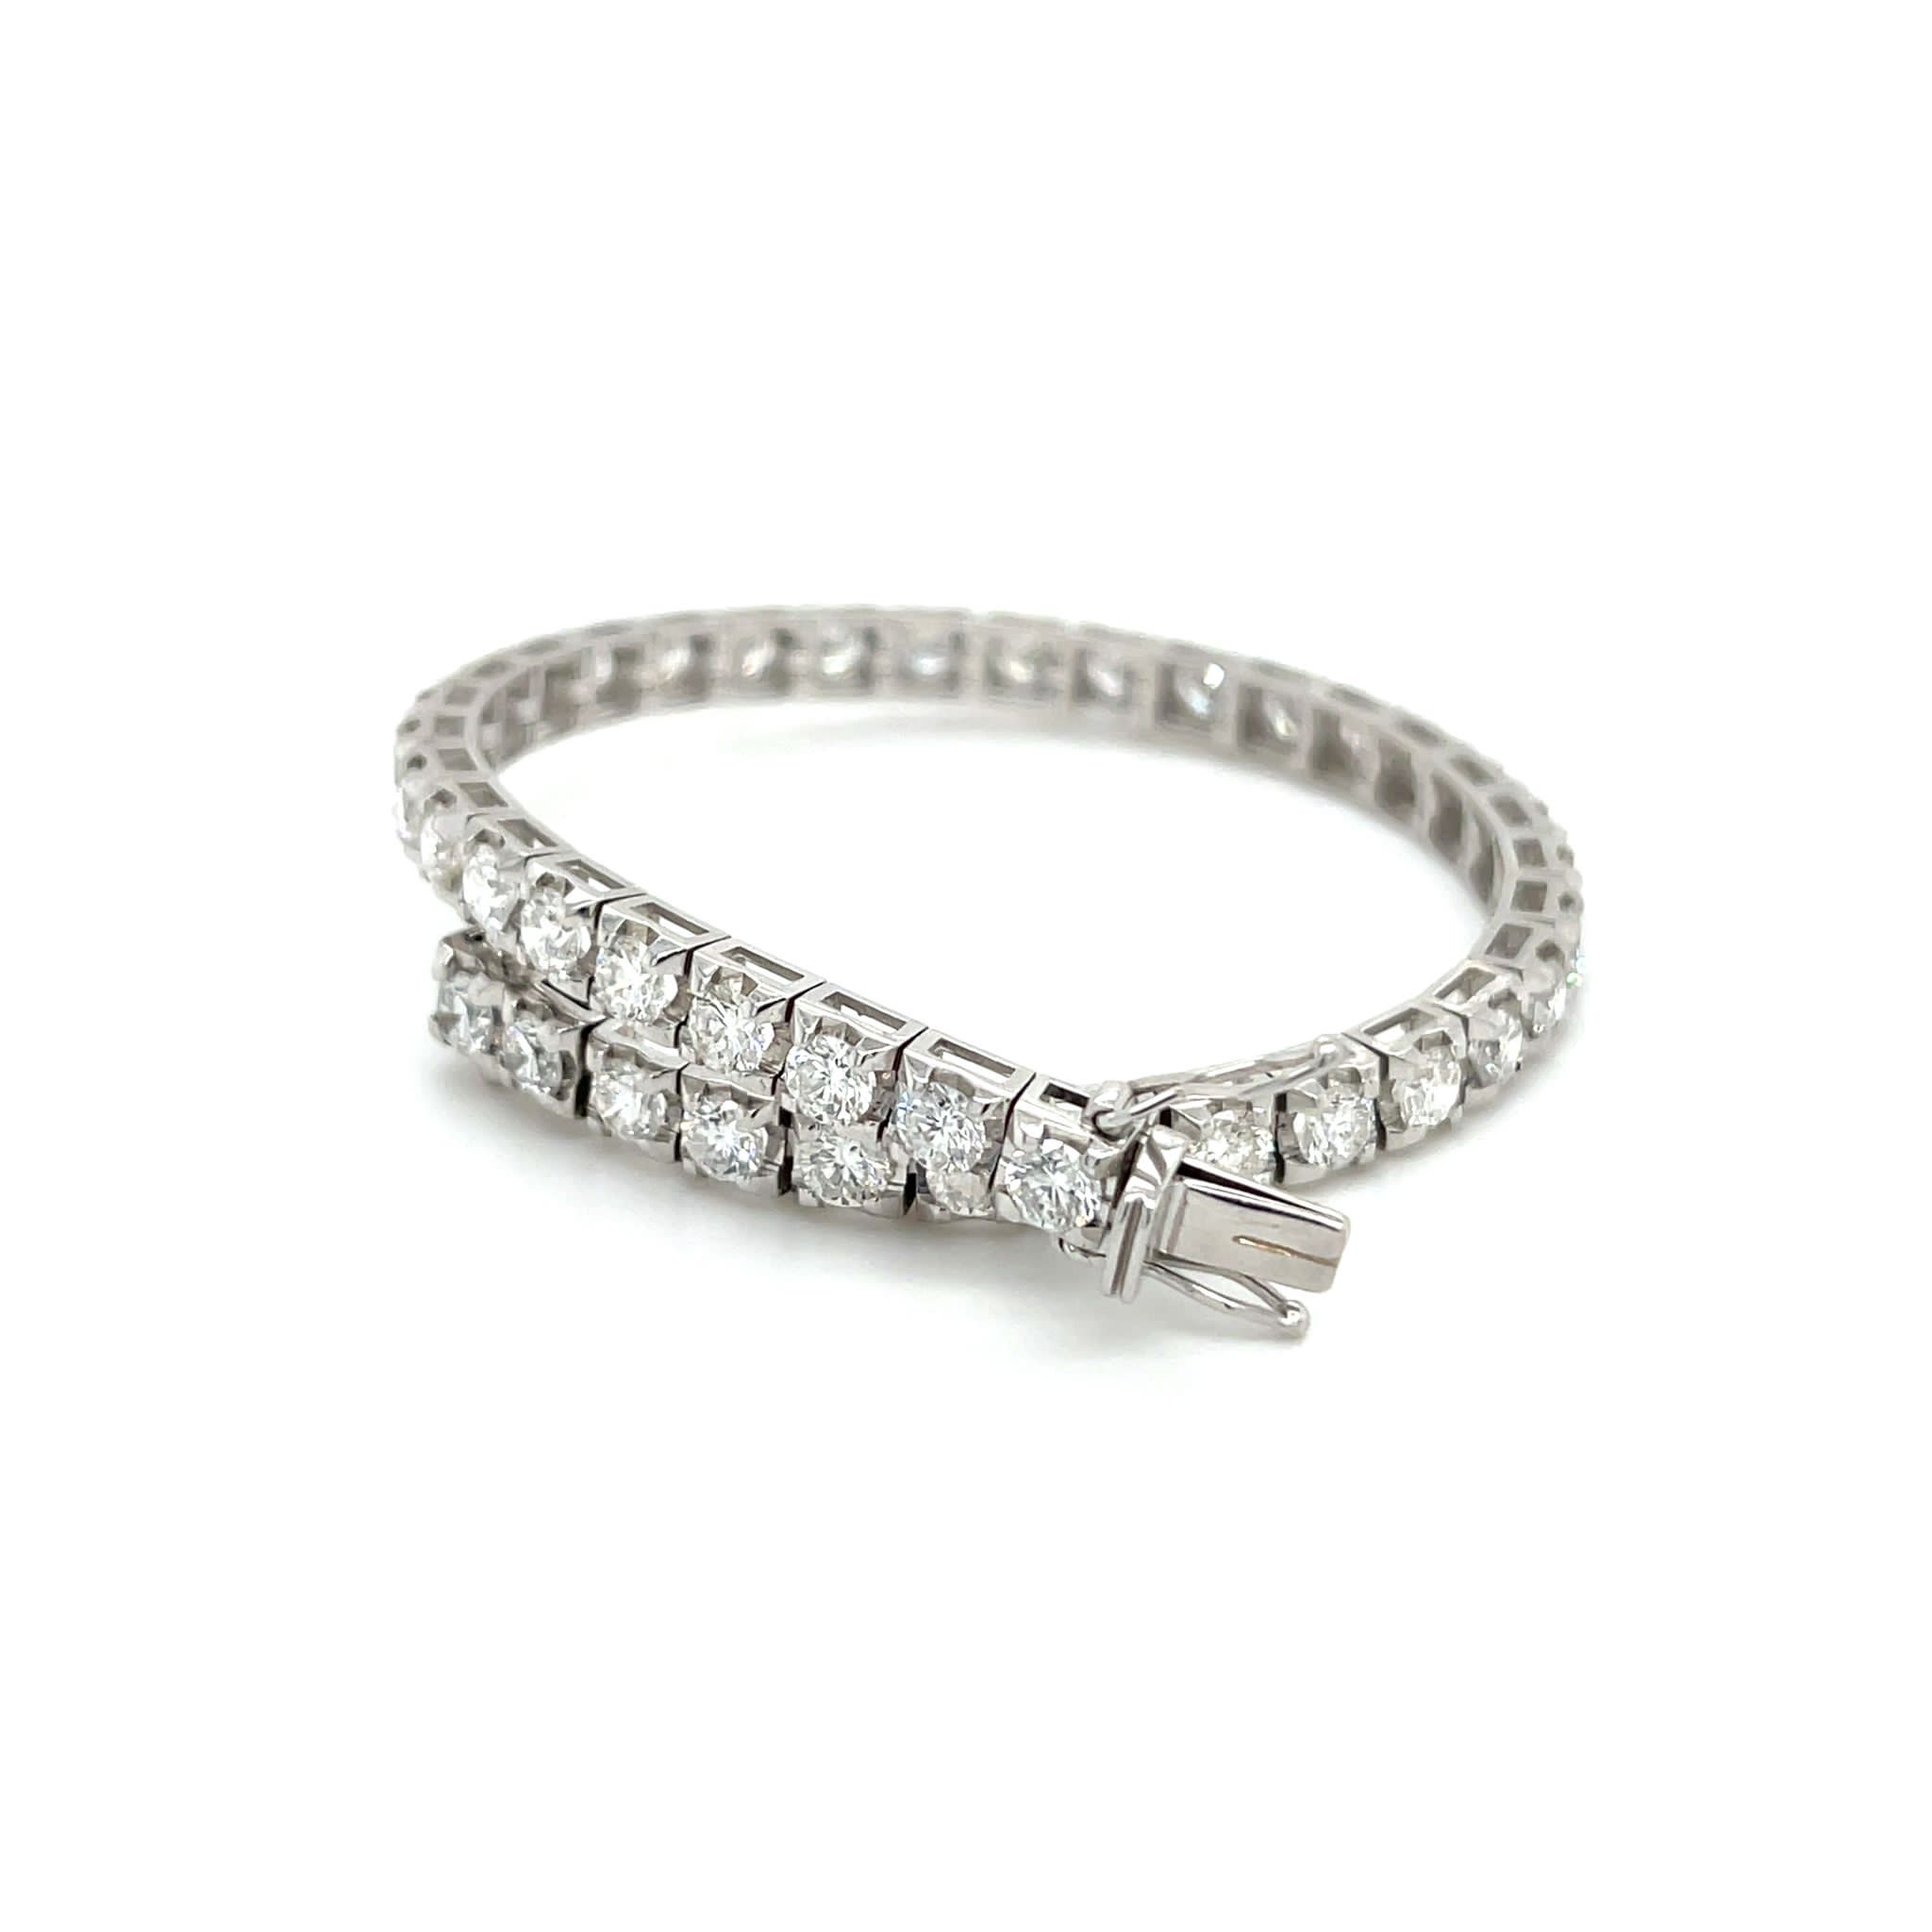 The First Thing on my Wishlist: A Diamond Bracelet